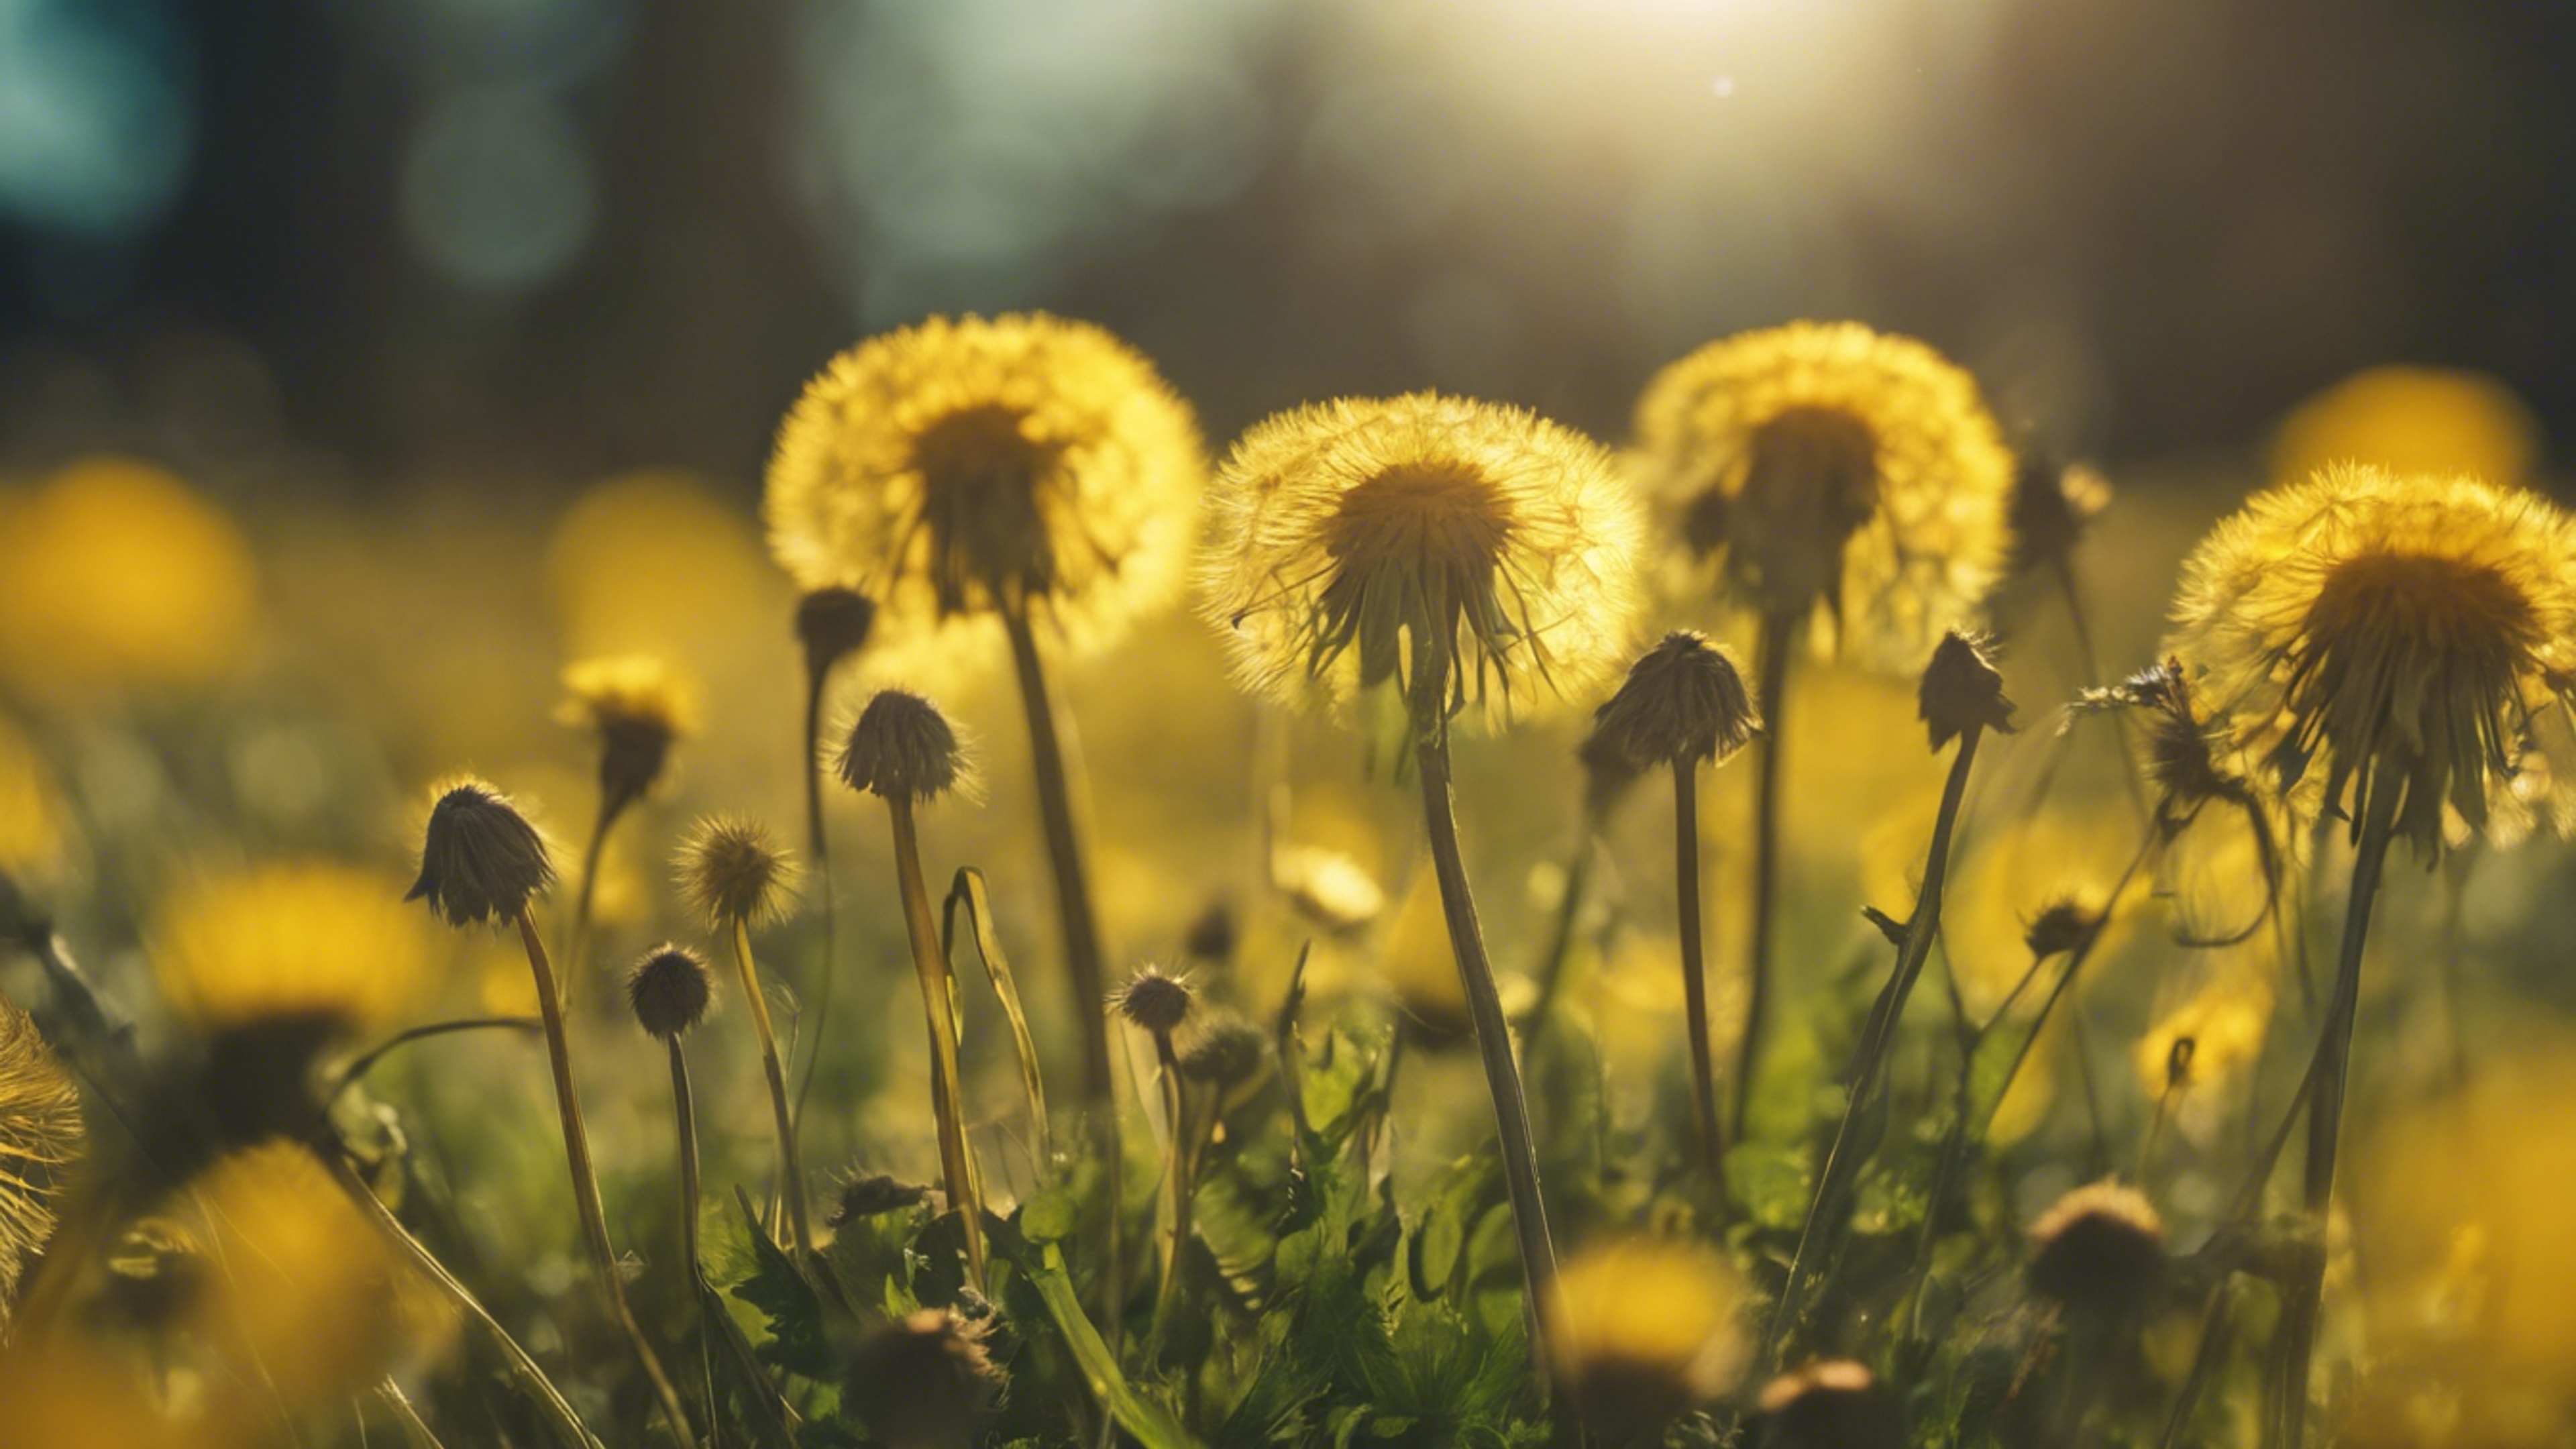 A field of yellow dandelion flowers under the bright summer sun.壁紙[04eee26c9c864109855e]